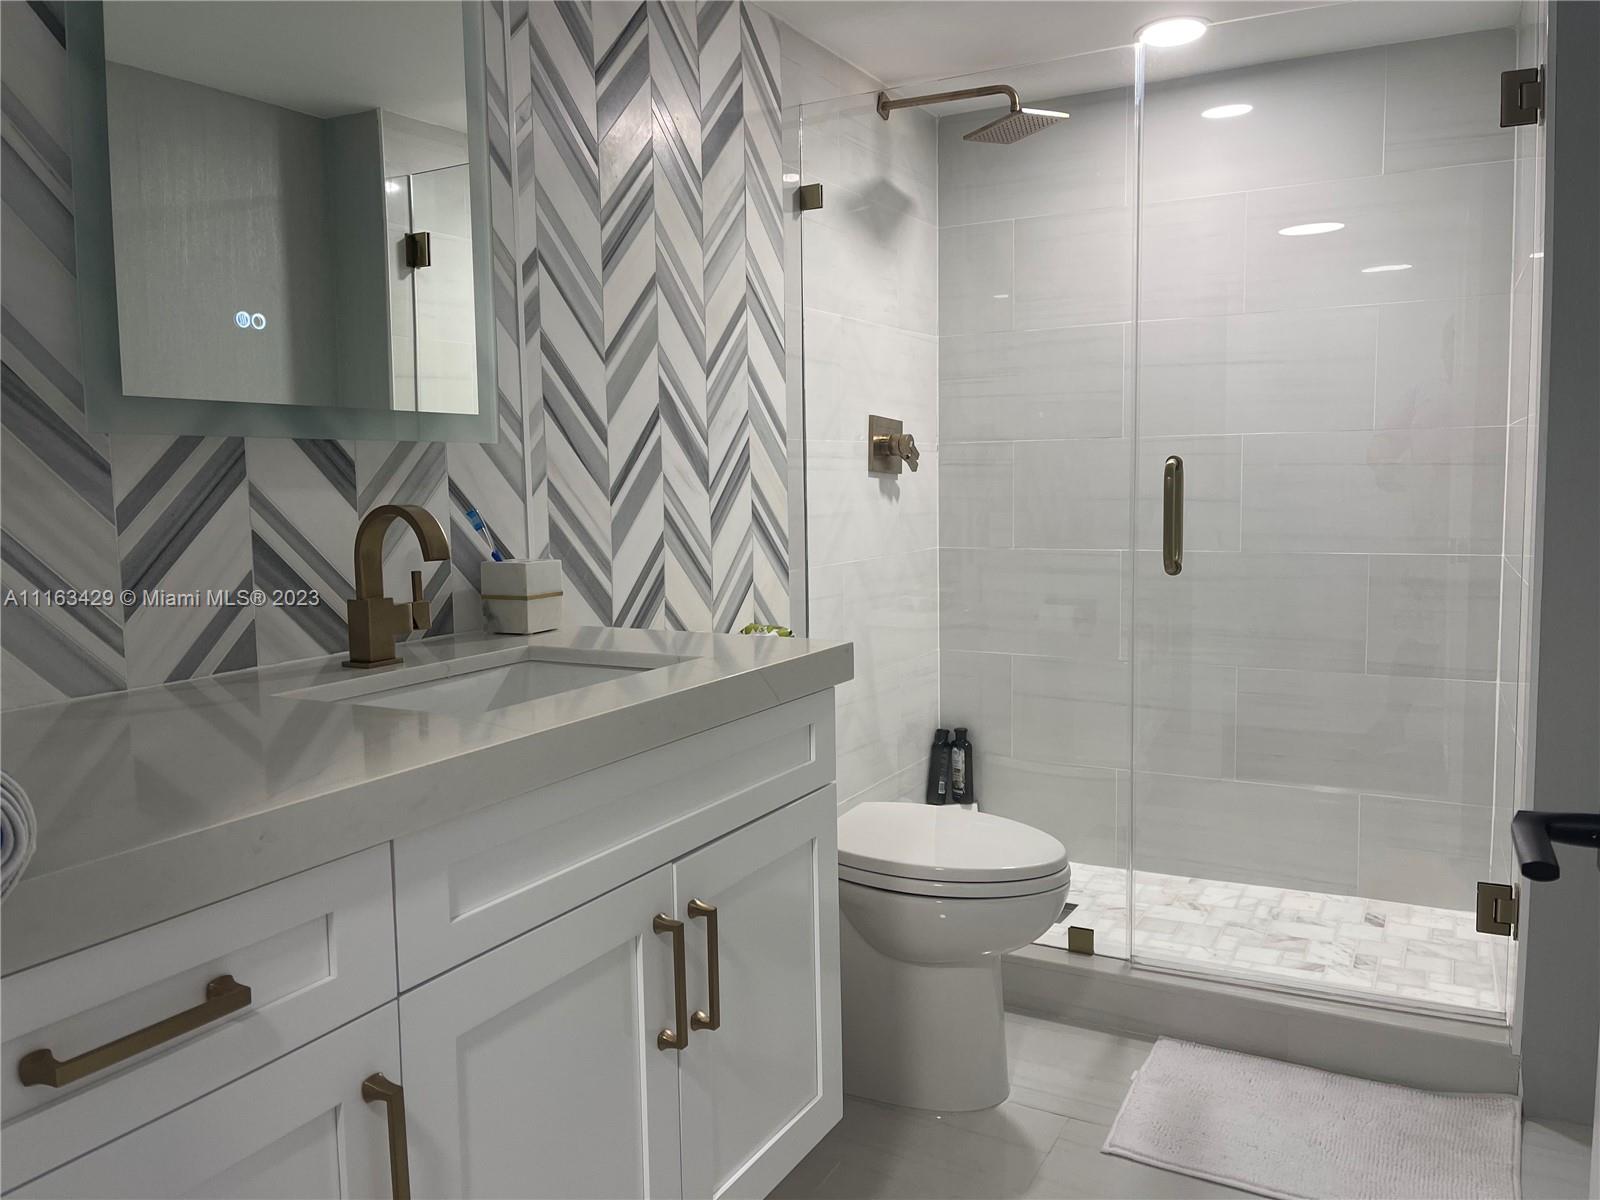 Rental Property at 2555 Collins Ave 1409, Miami Beach, Miami-Dade County, Florida - Bedrooms: 2 
Bathrooms: 2  - $6,900 MO.